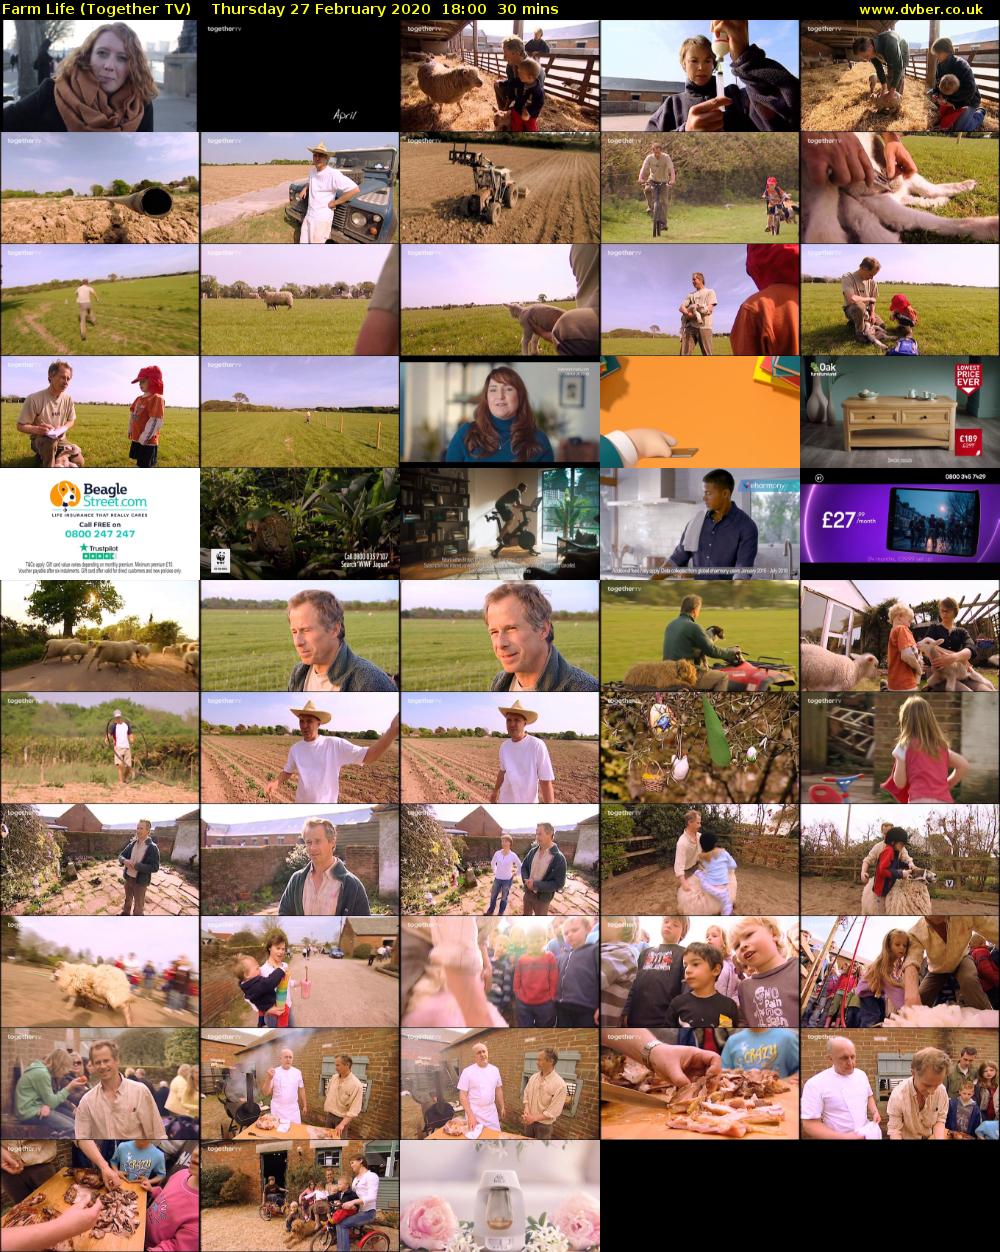 Farm Life (Together TV) Thursday 27 February 2020 18:00 - 18:30